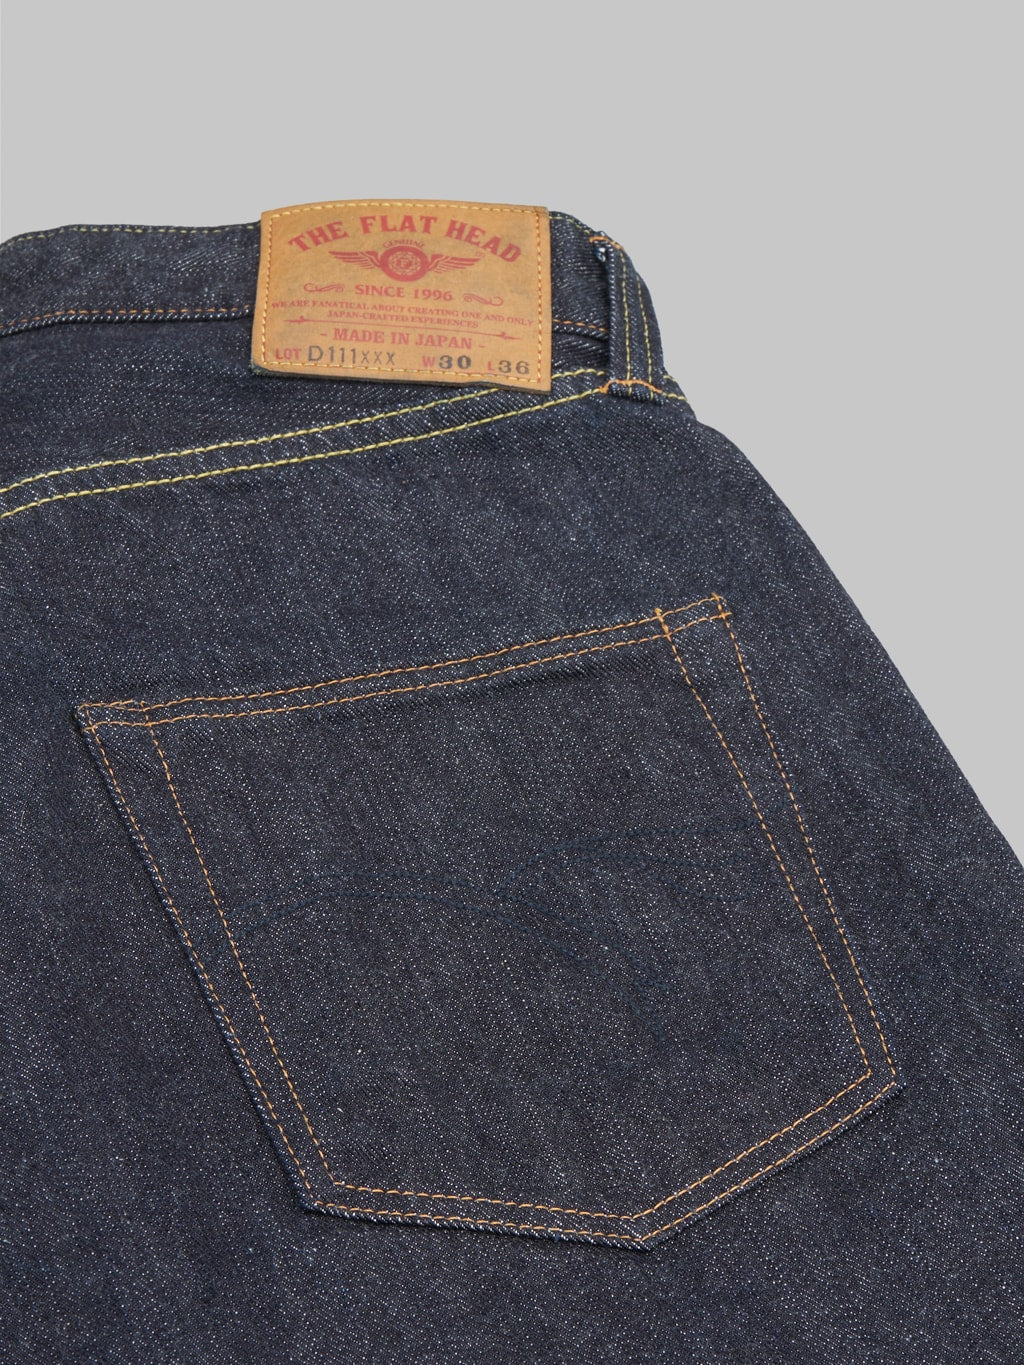 the flat head fn d111 wide straight selvedge denim jeans pocket details